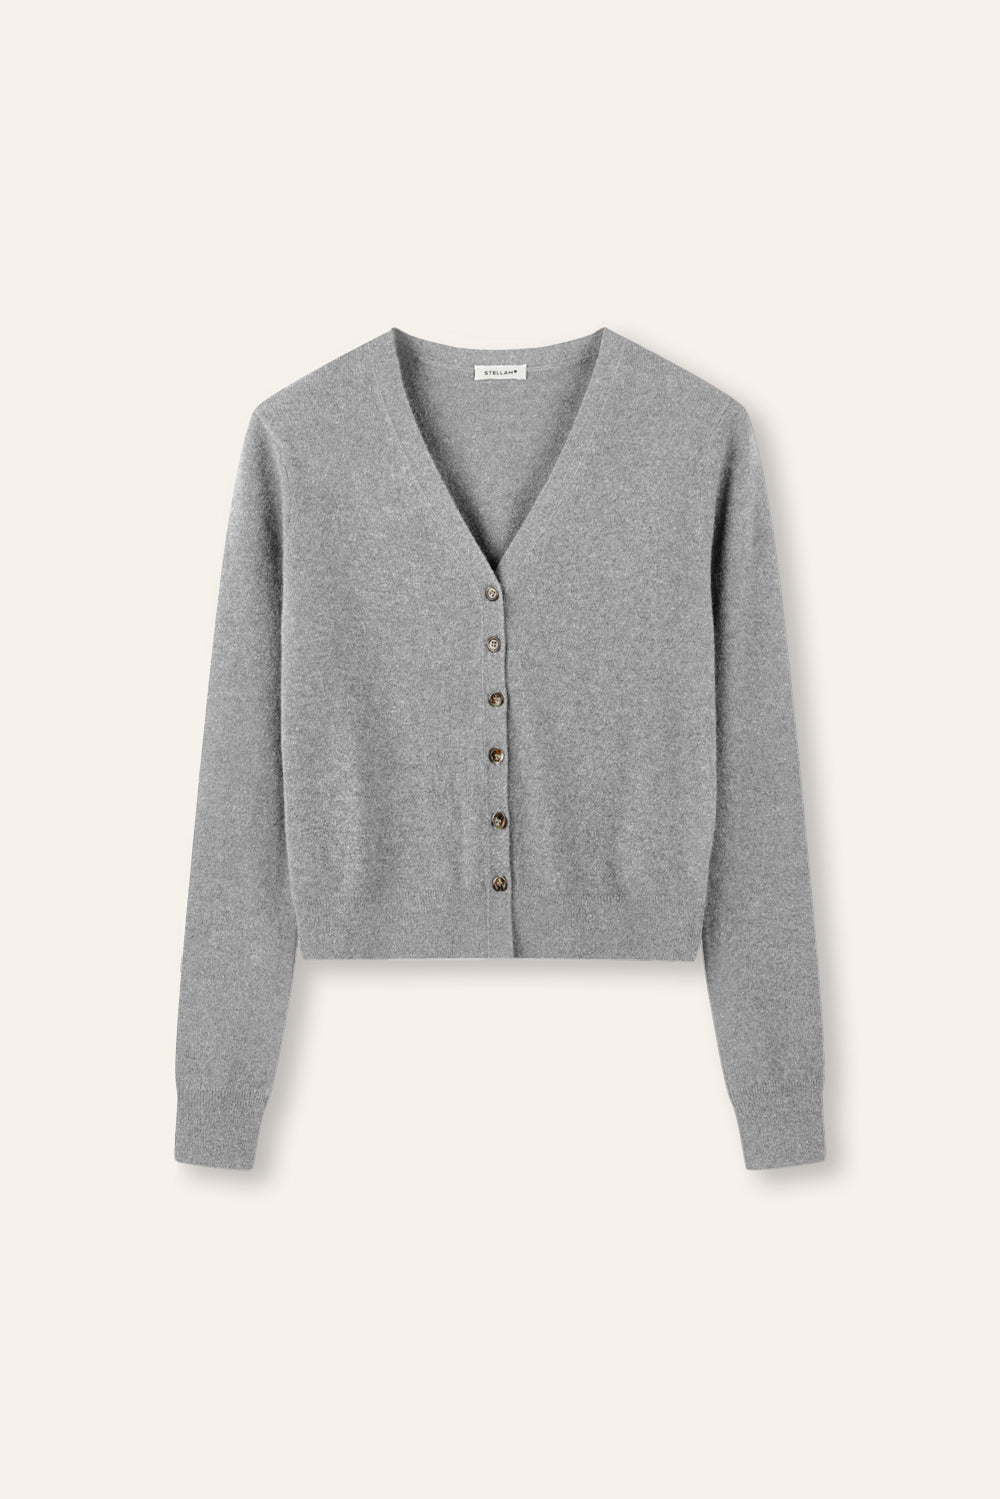 GRACE superfine cashmere cardigan (Grey) - STELLAM